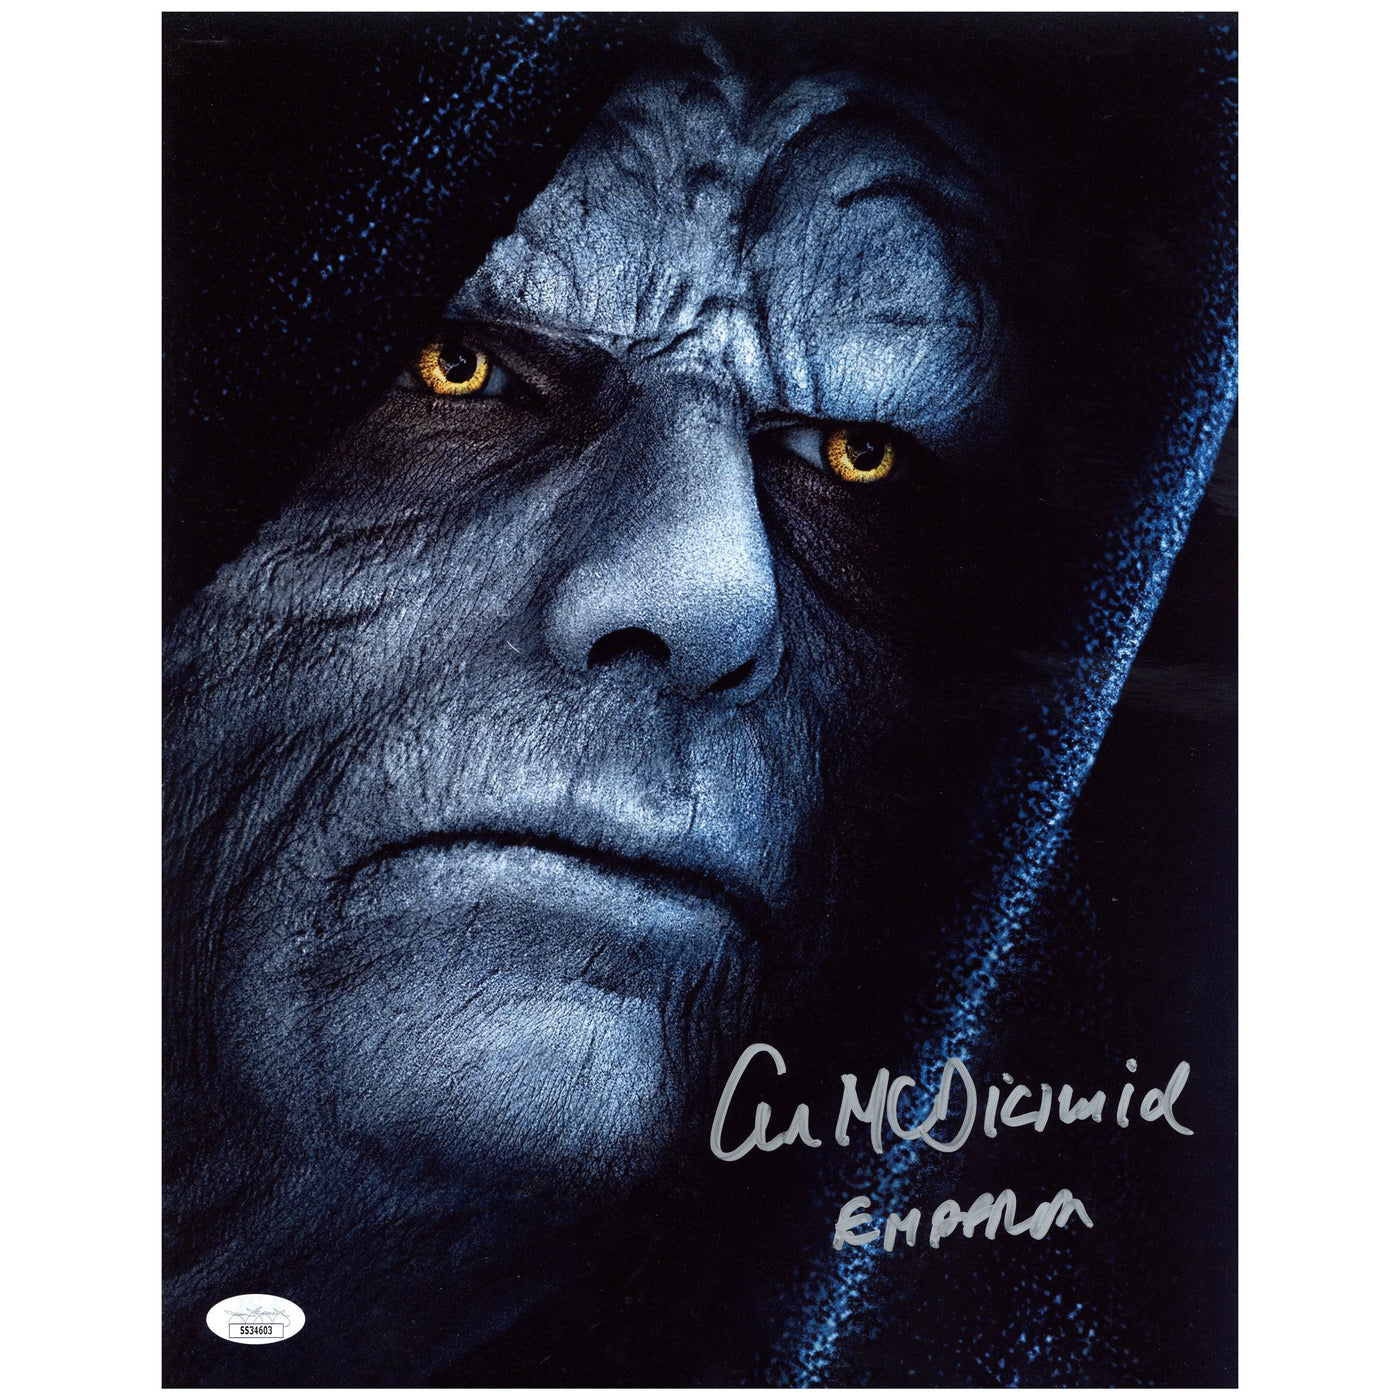 Ian McDiarmid Signed 11x14 Photo Star Wars Emperor Autographed JSA COA